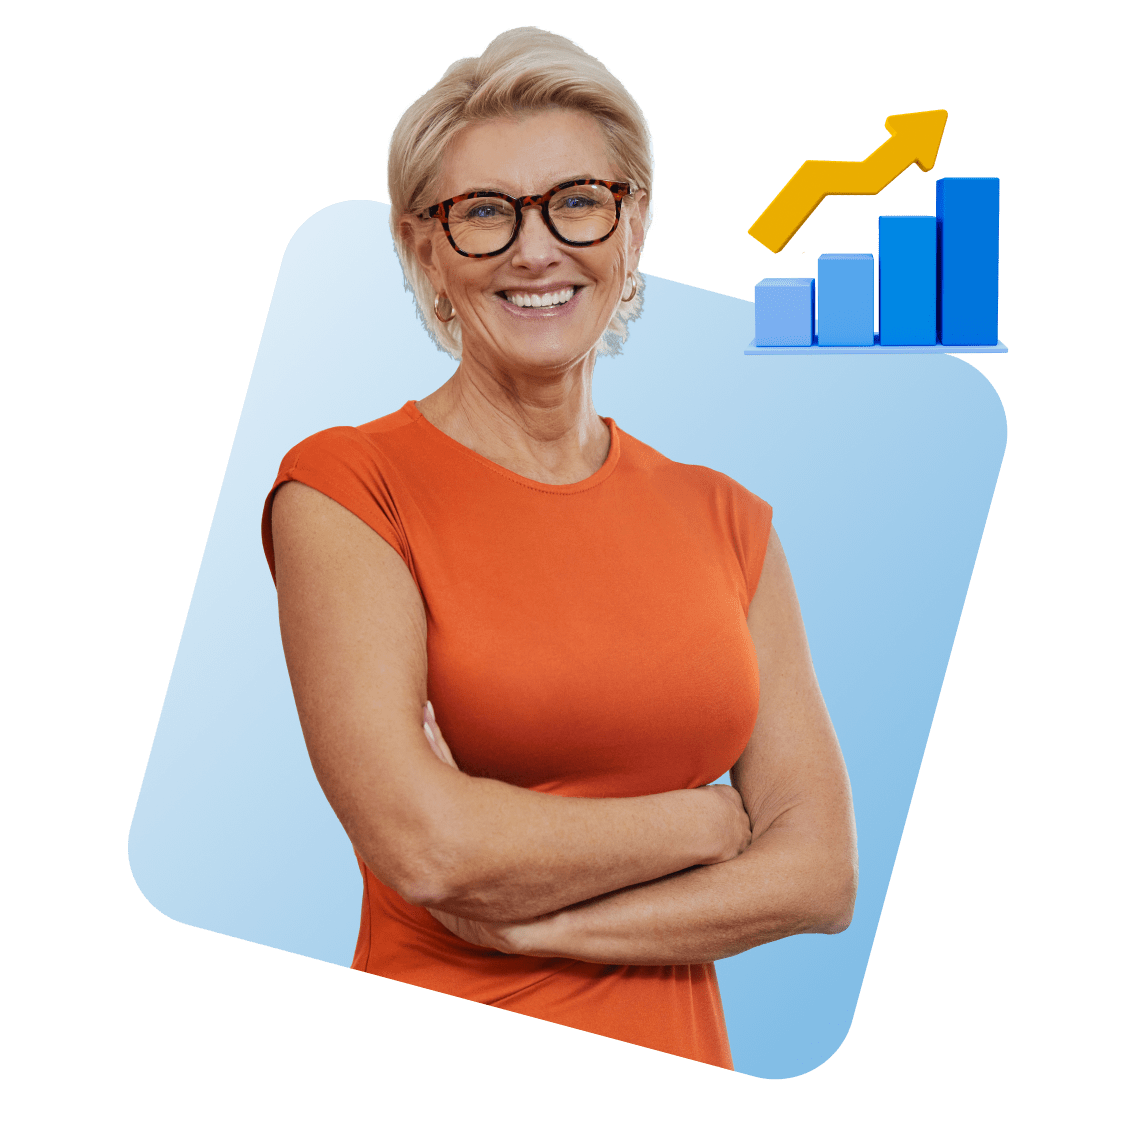 Business Management and Administration image 2 (name 4 Adult Women Glasses Orange Shirt BarGraph)